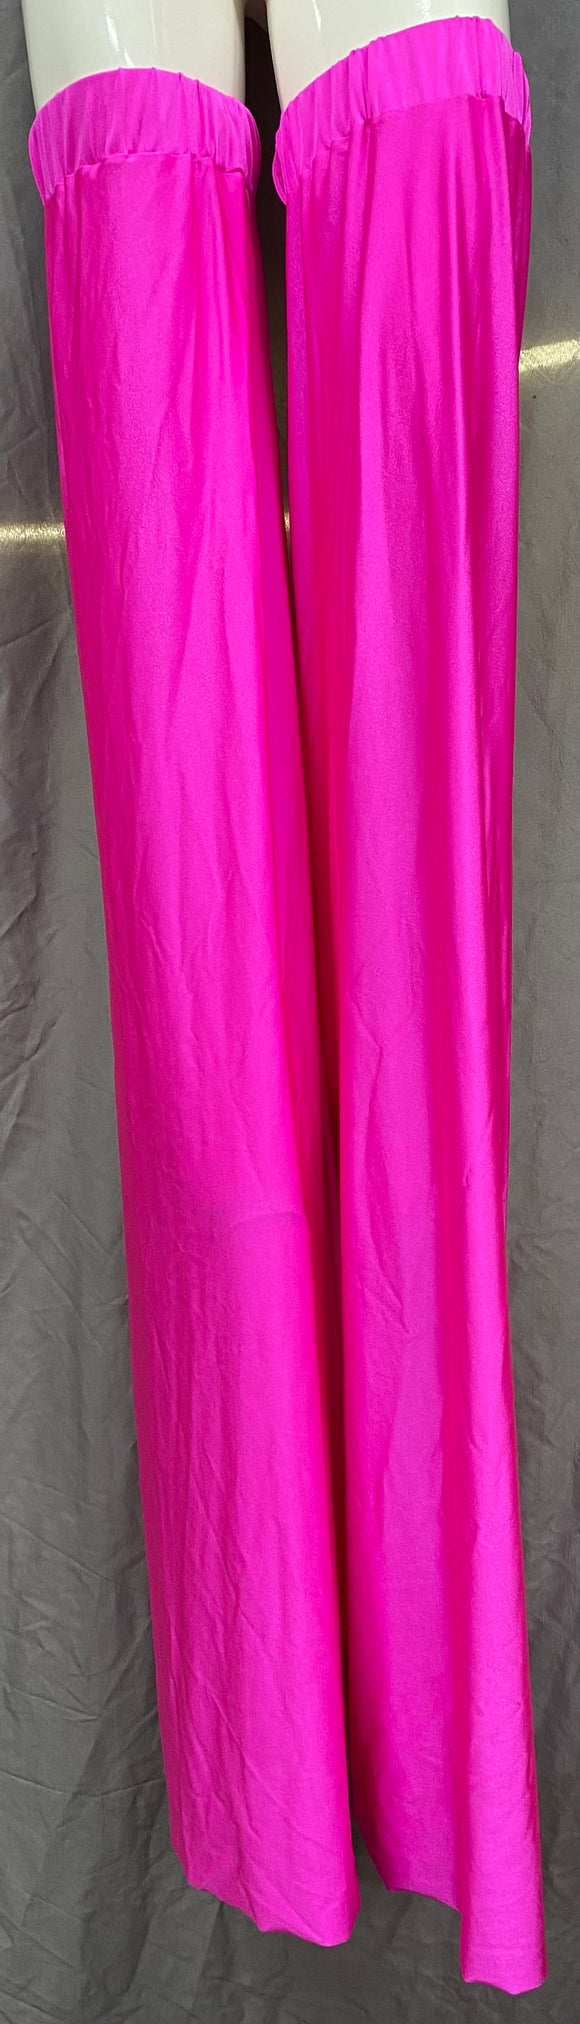 Stilt Covers - Neon Pink 51